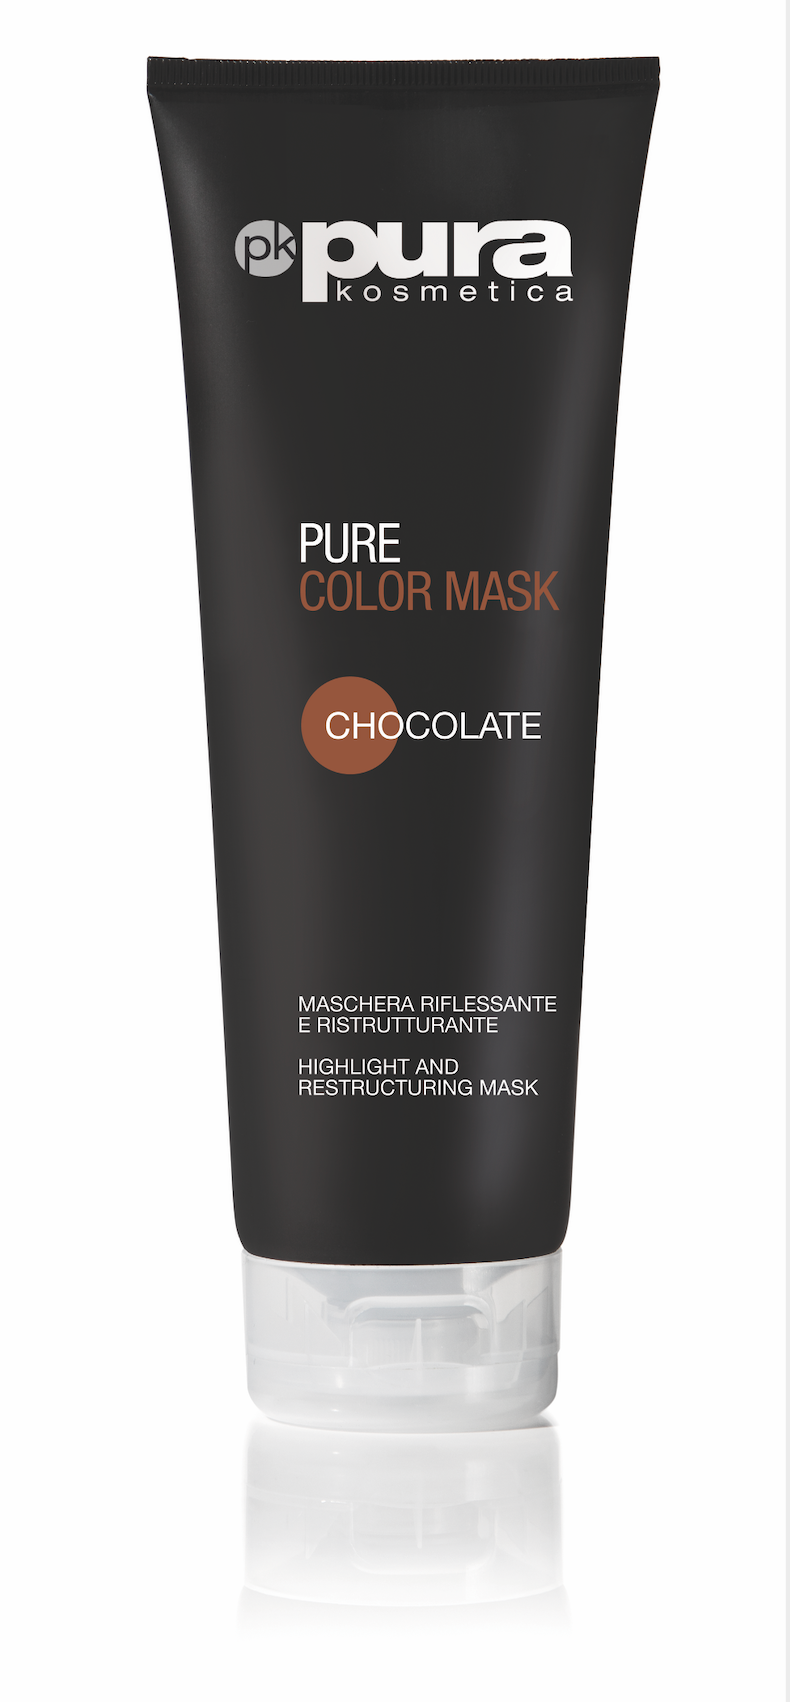 Pura Kosmetica Pure Color Mask Chocolate, 250ml